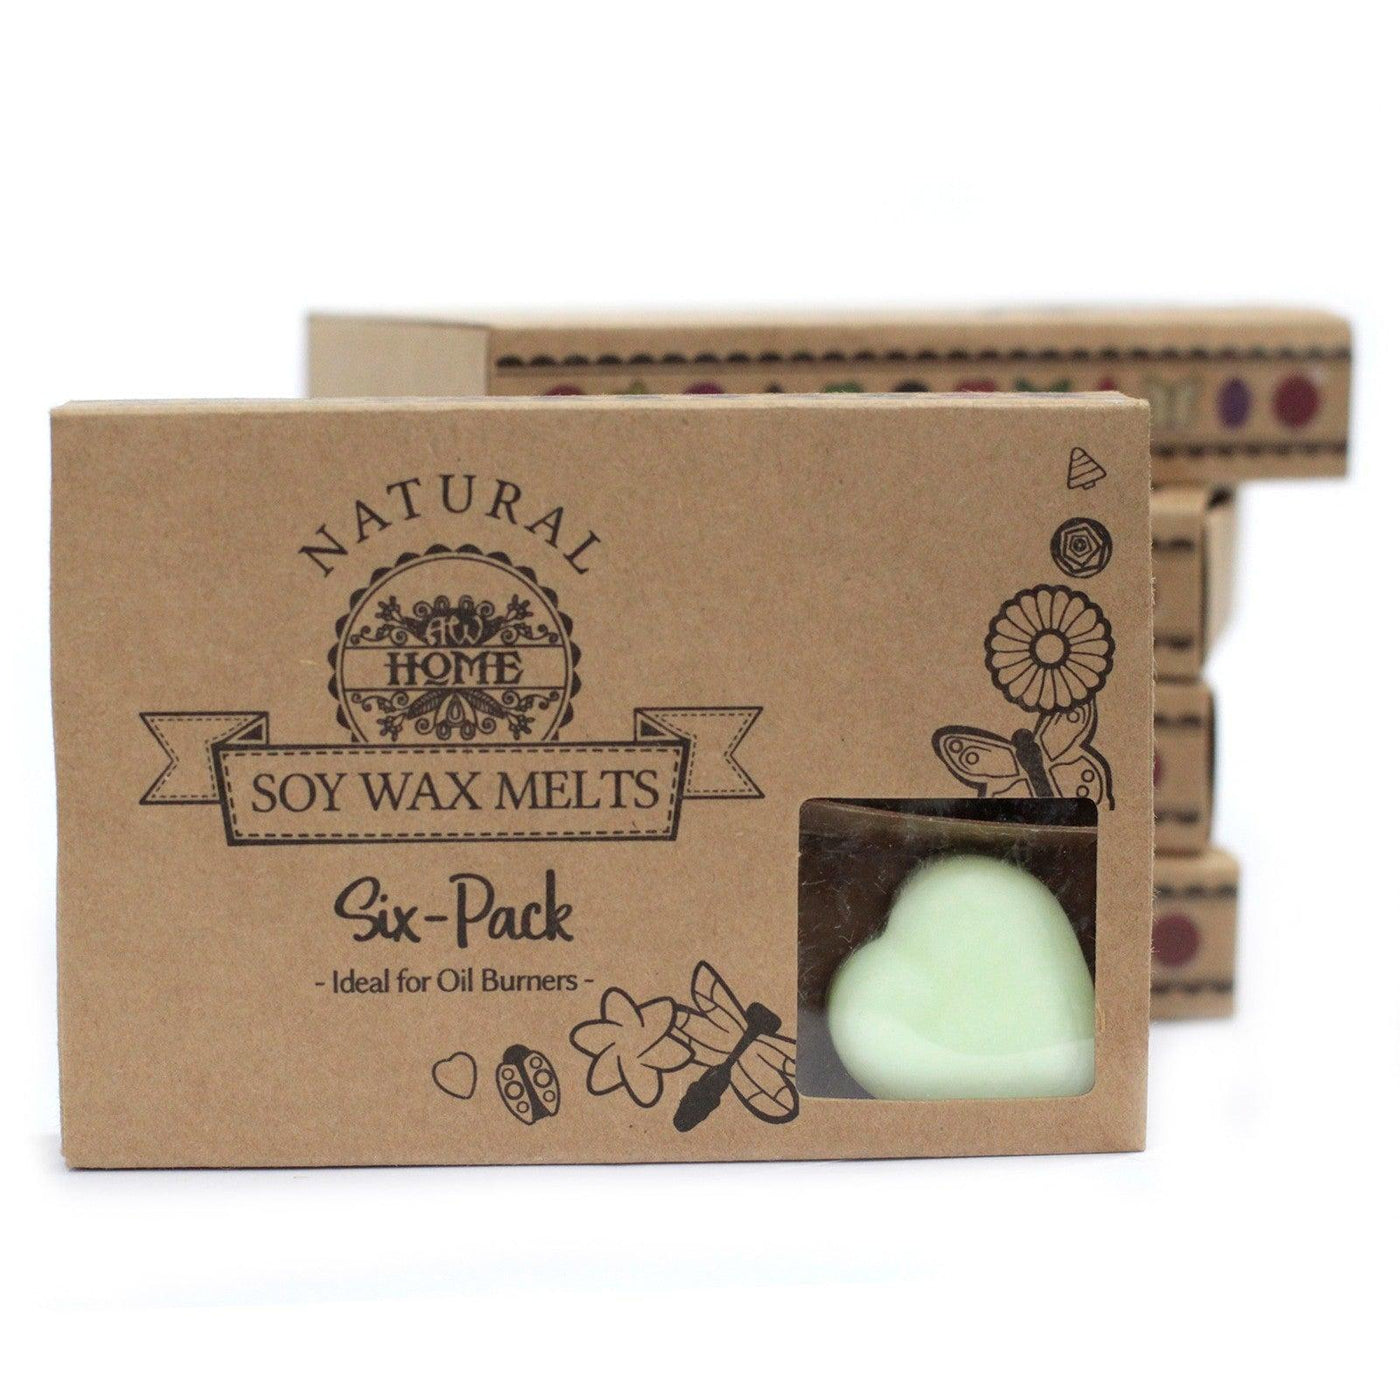 Box of 6 Light Green Heart Shaped Wax Melts - Apple Spice.